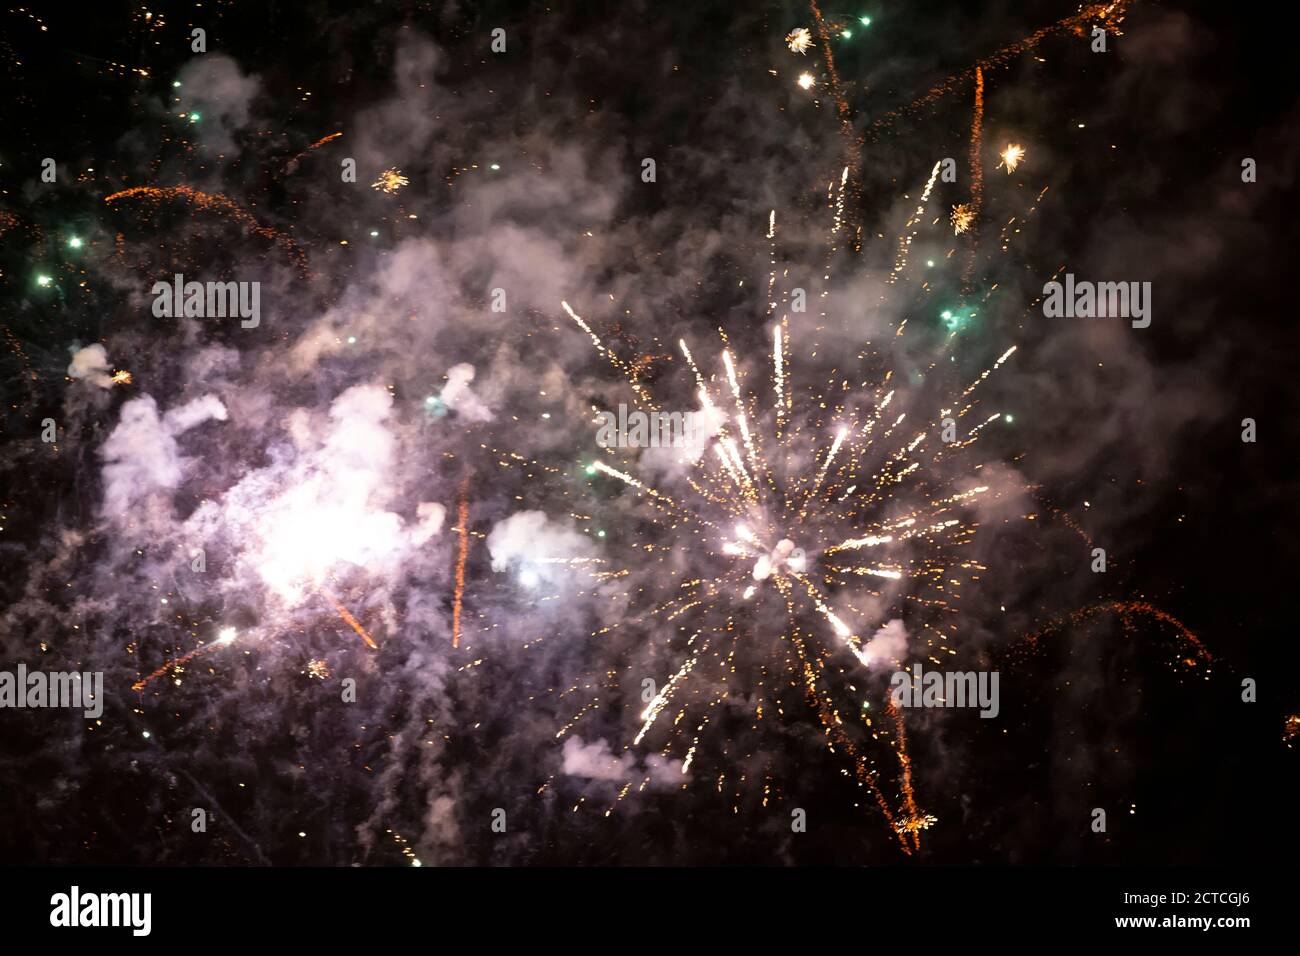 Festive background of golden fireworks and white smoke. Stock Photo